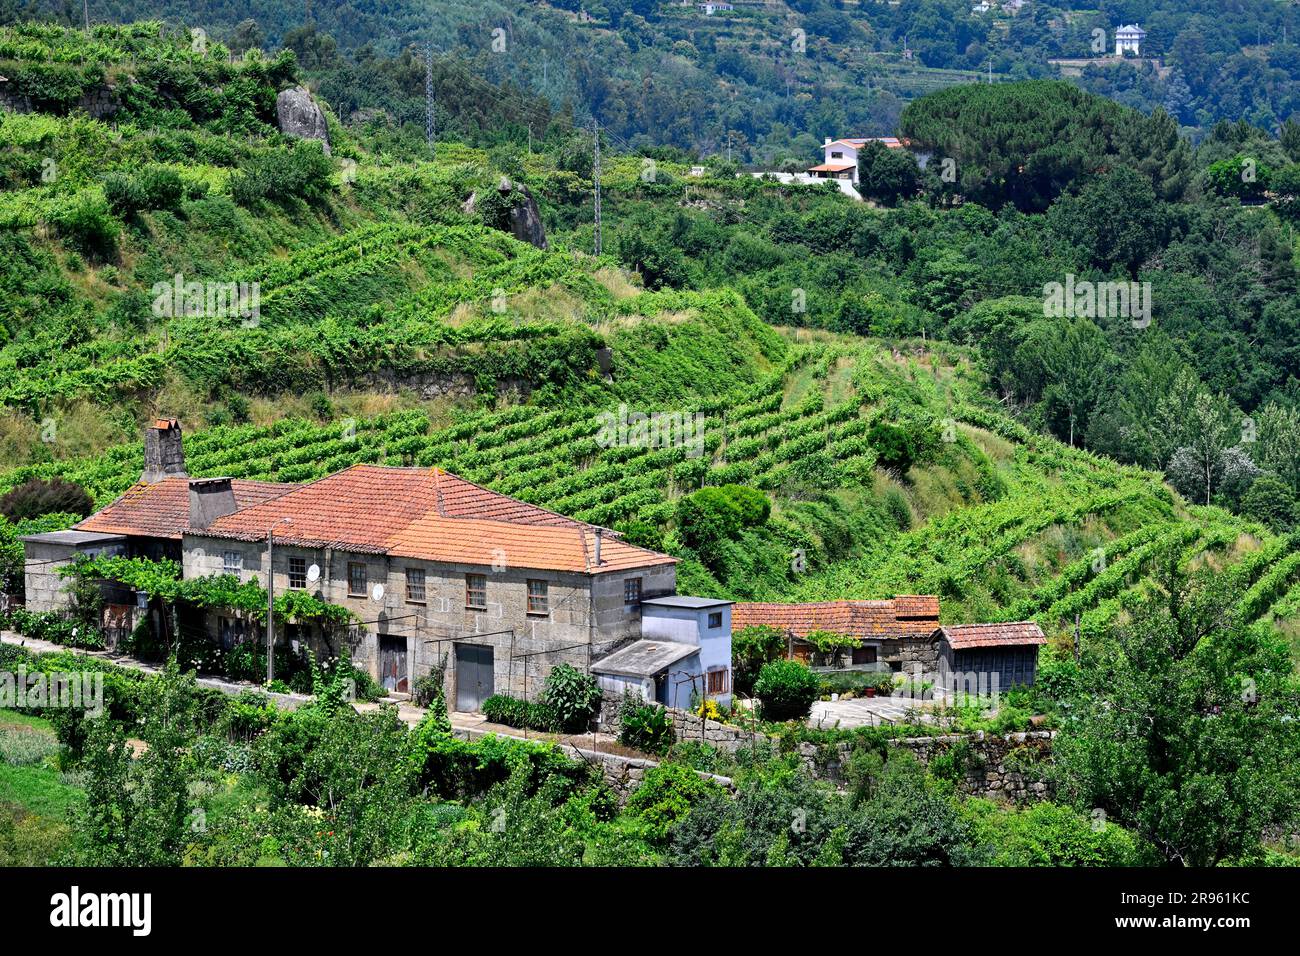 Farm house and building with terraced crops in hillside near Santa Maria de Sardoura, northern Portugal Stock Photo